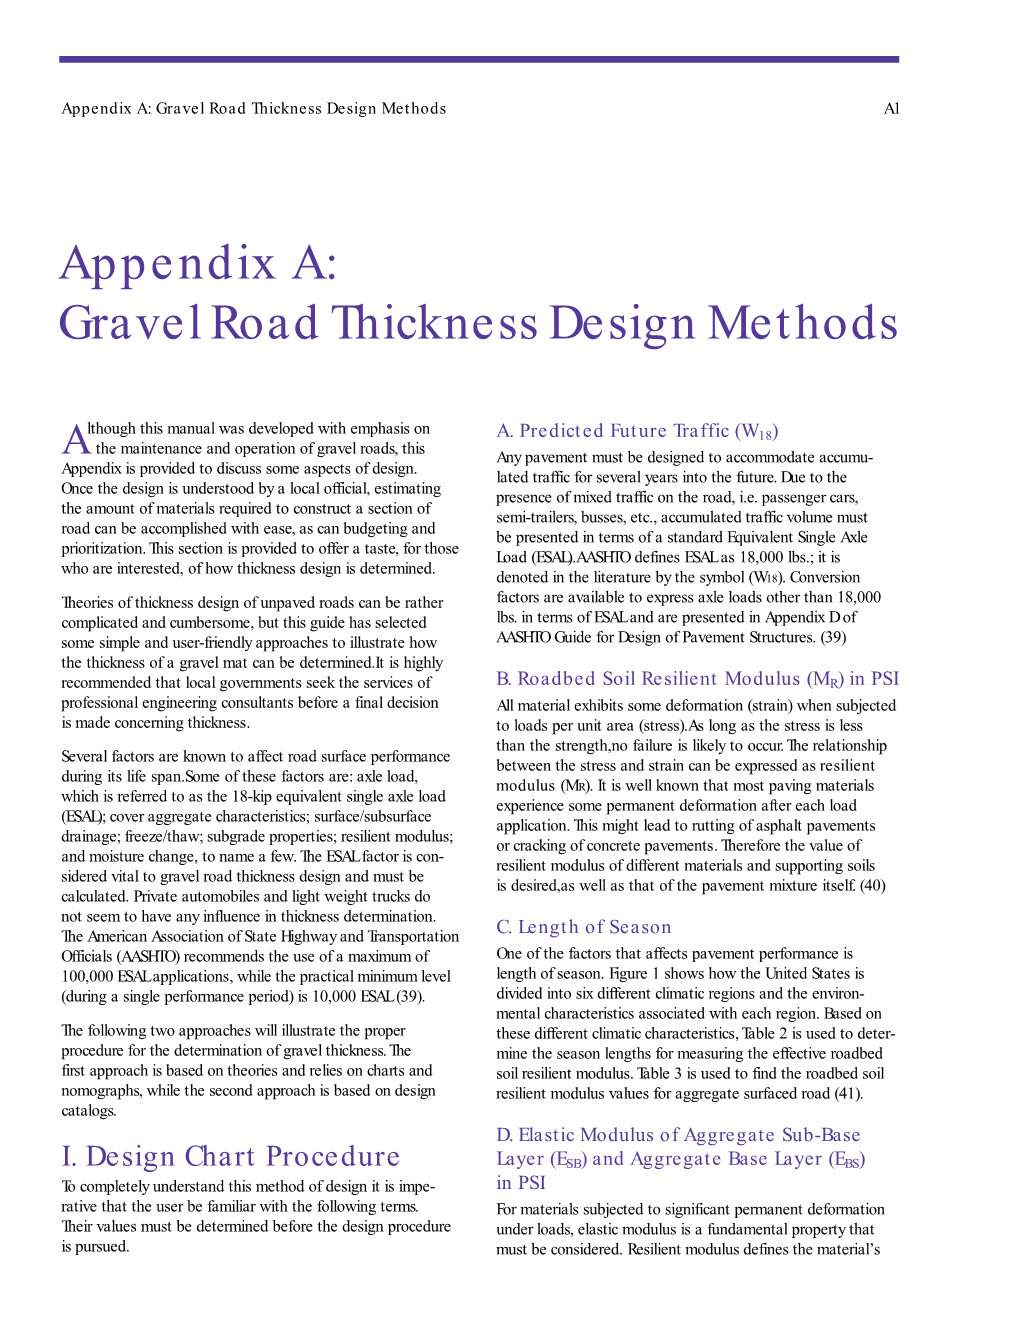 Gravel Roads: Maintenance and Design Manual-- Appendix A: Gravel Road Thickness Design Methods